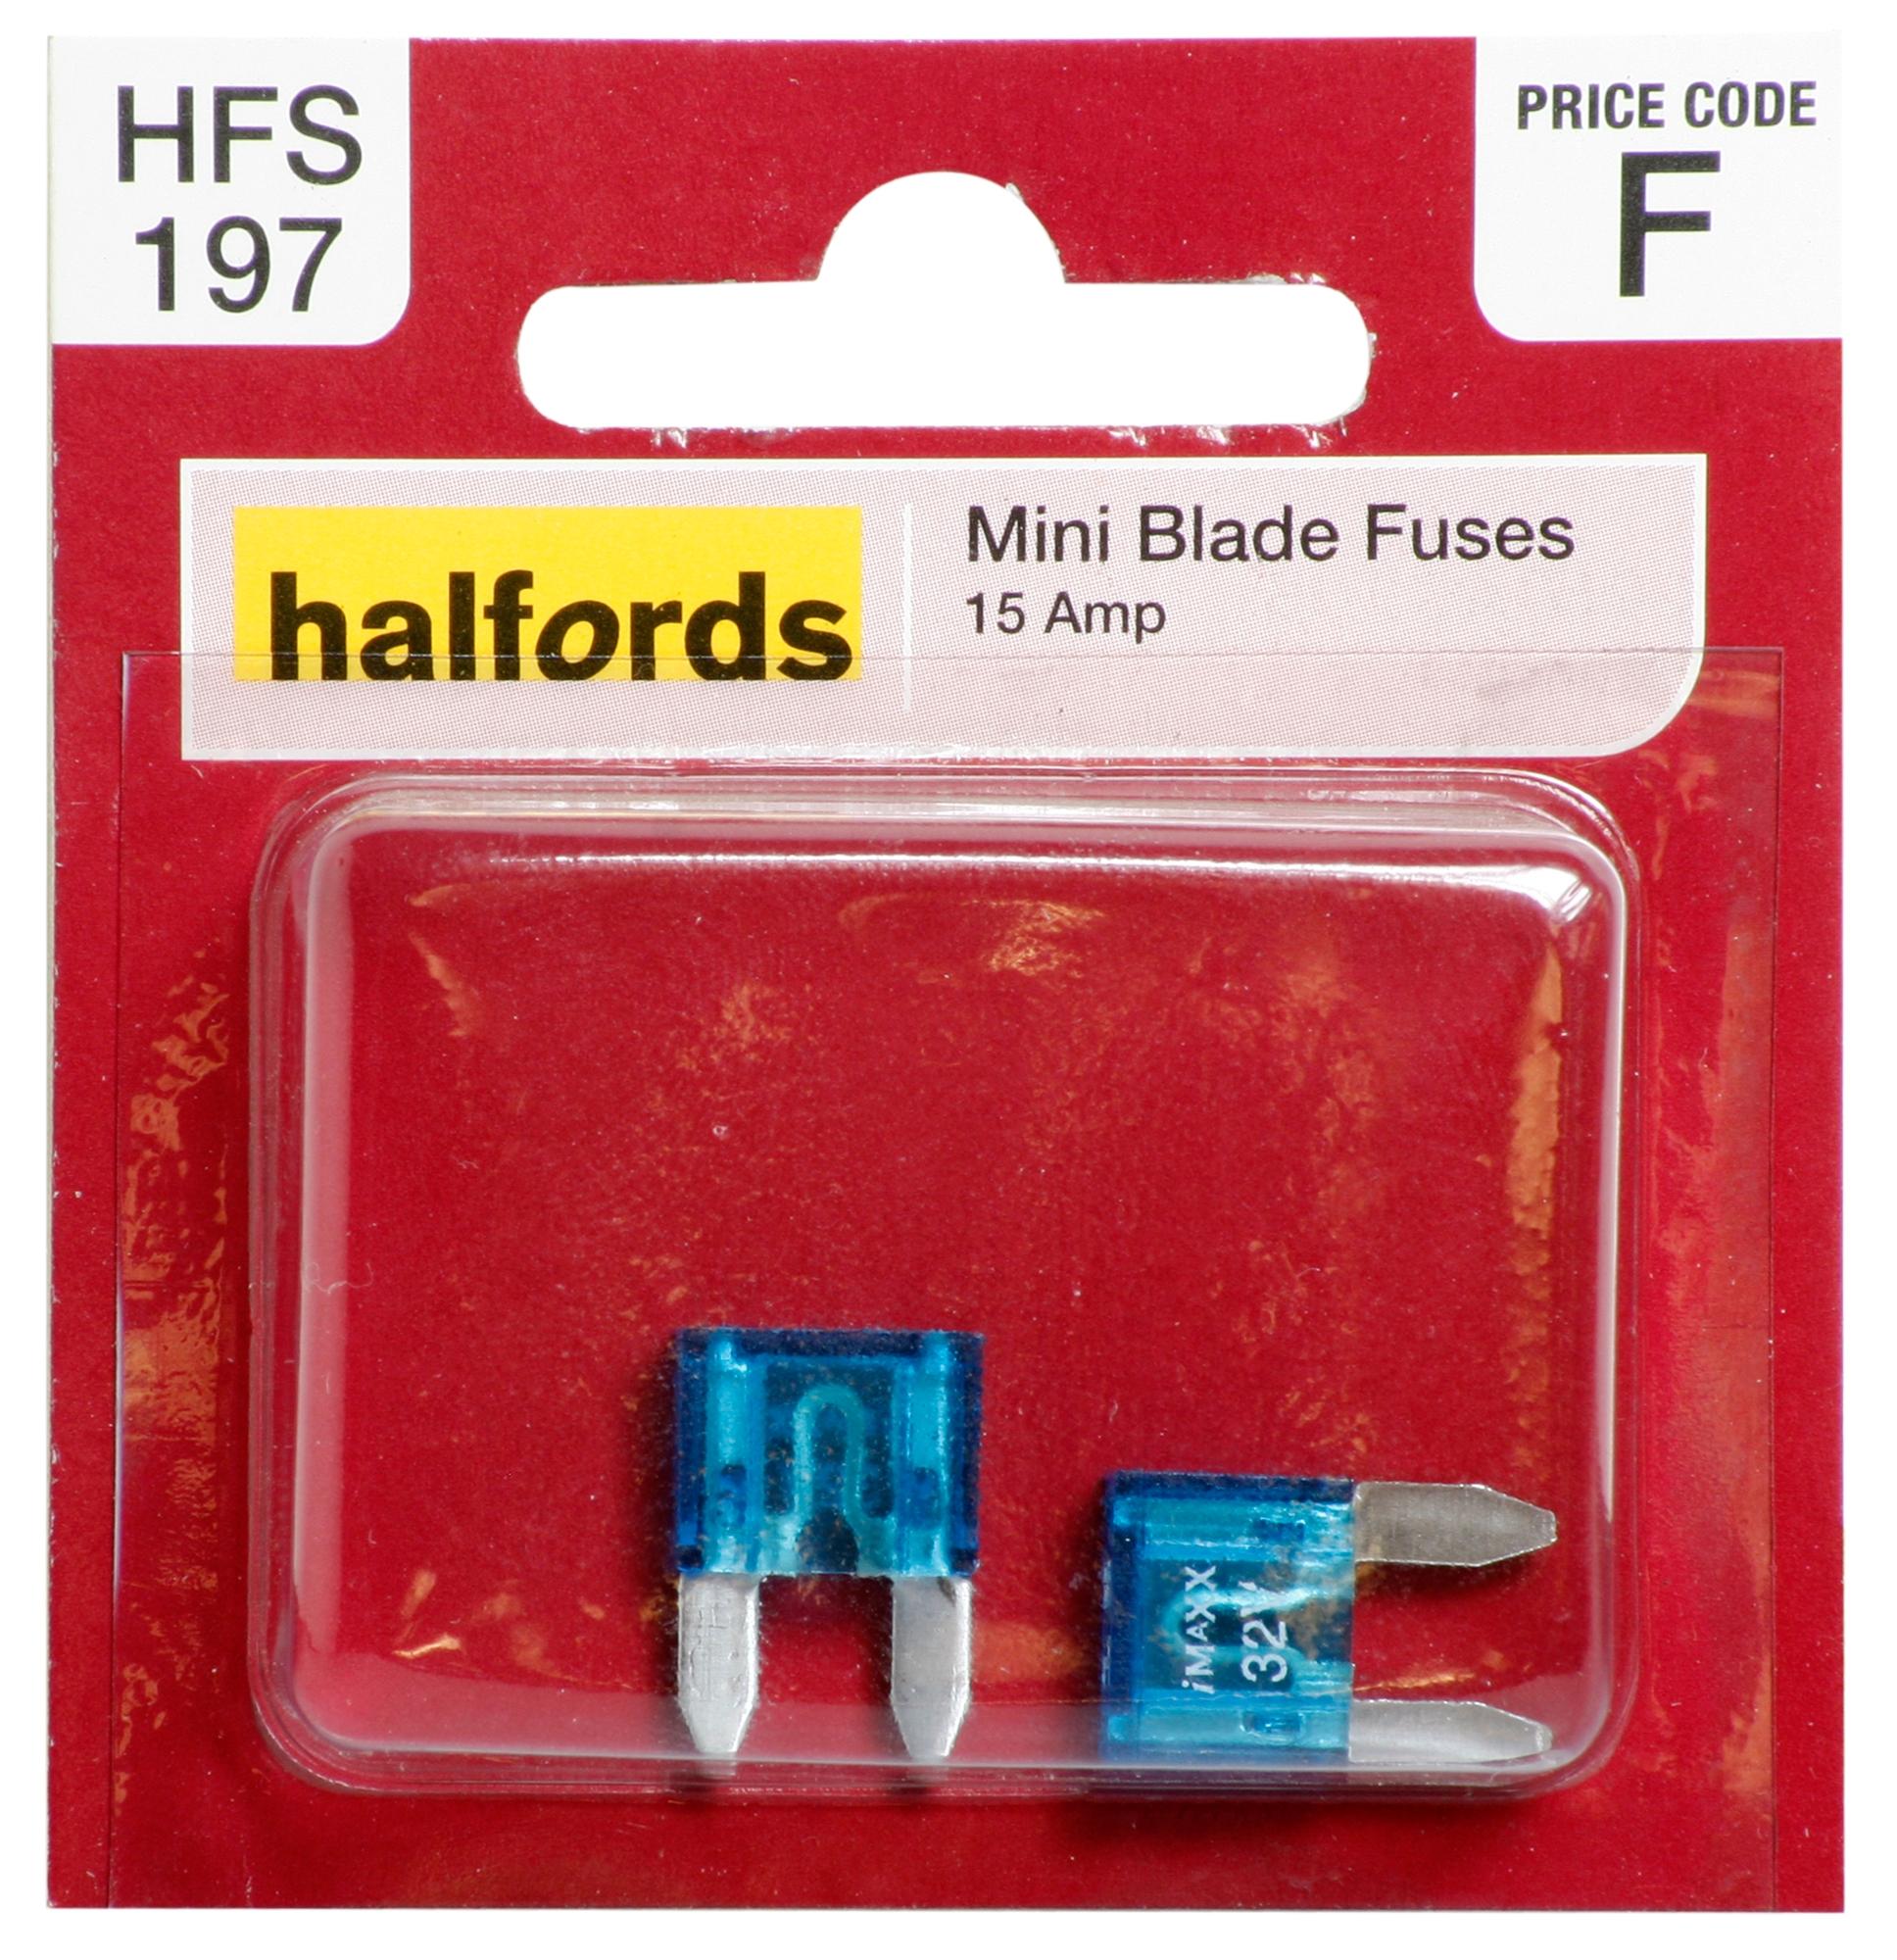 Halfords Mini Blade Fuses 15 Amp (Hfs197)